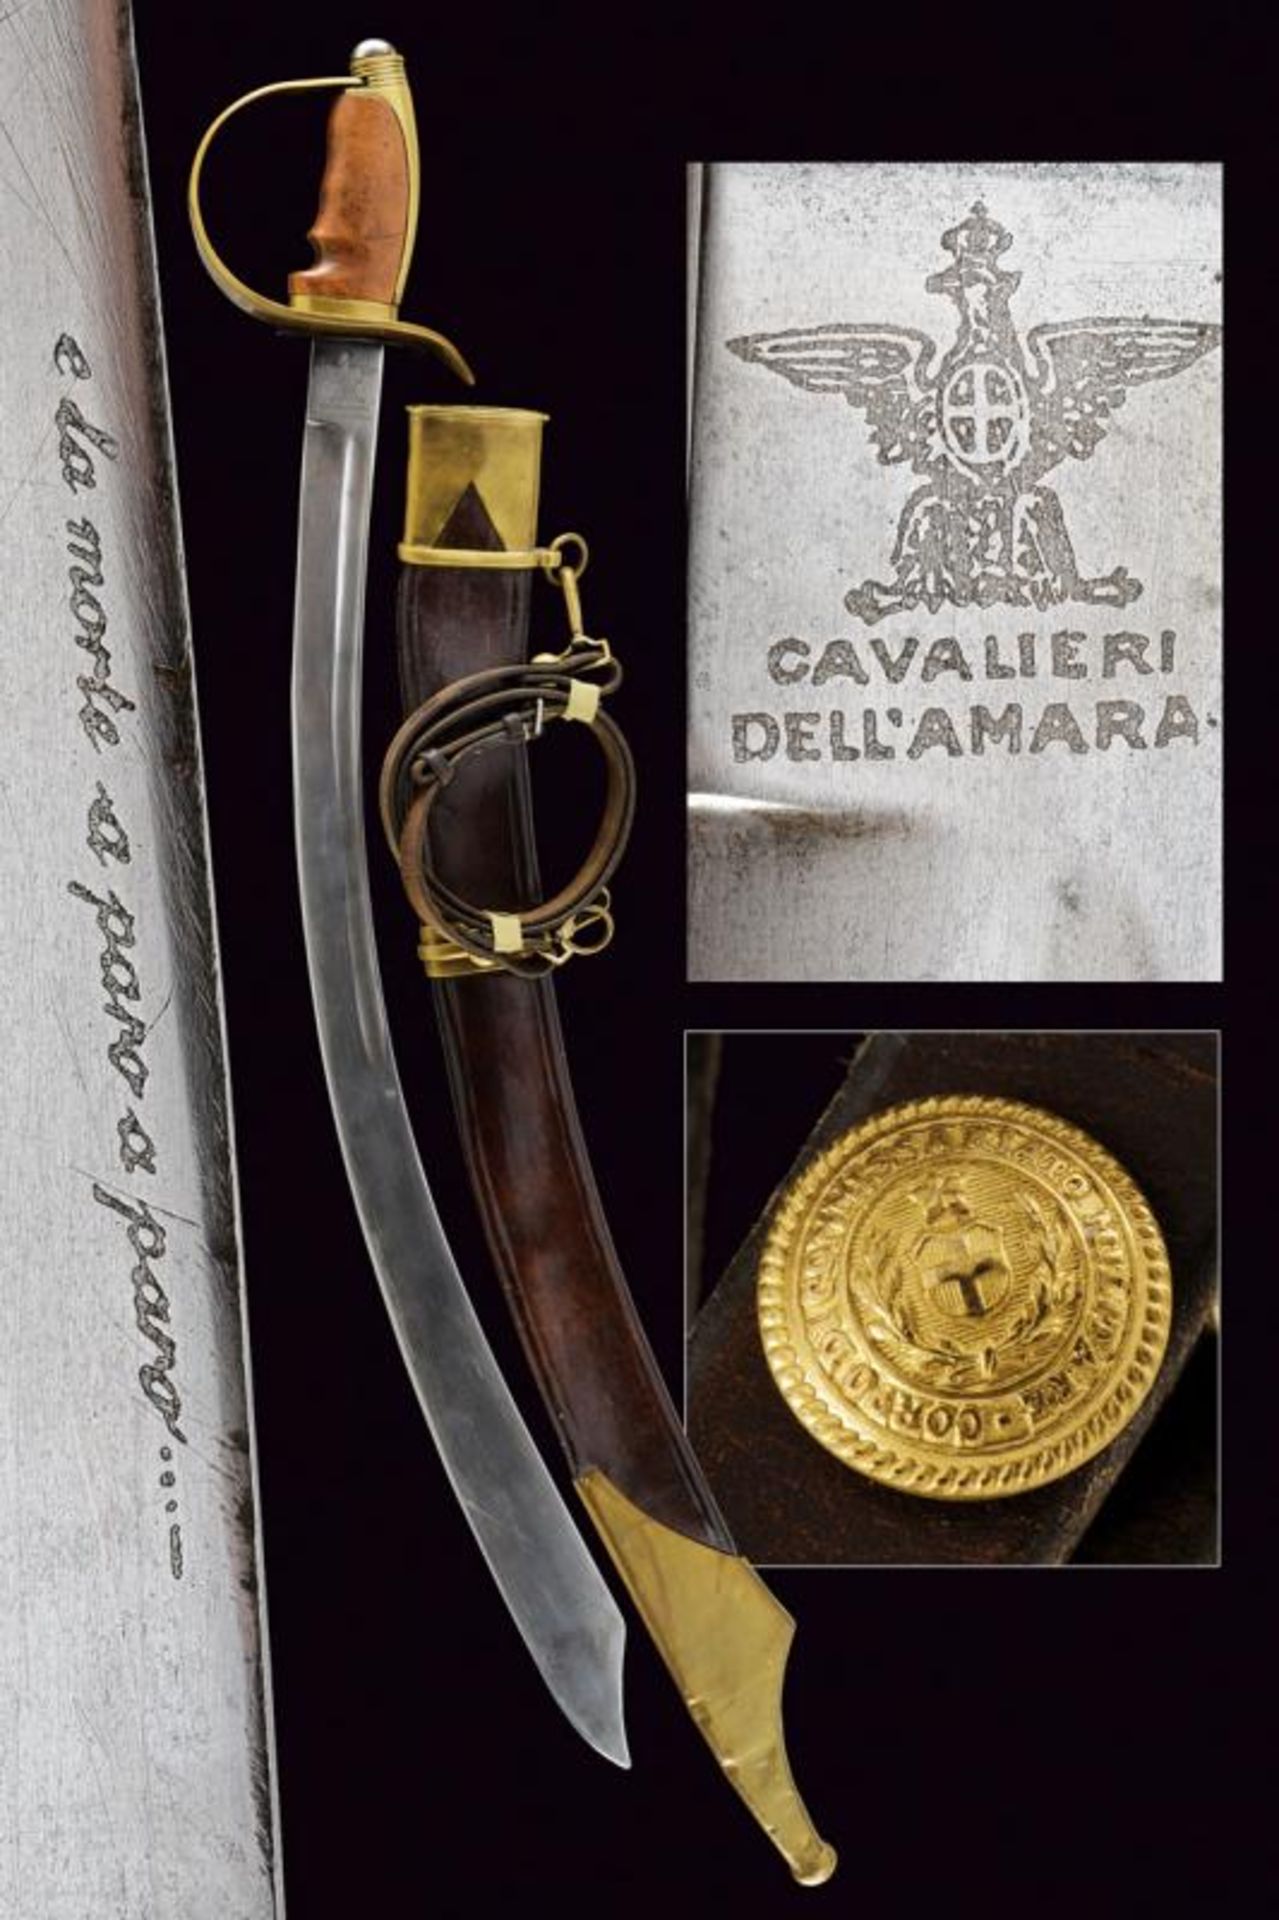 A trooper's sabre mod. 1937 of the 14th Squadron Group Colonial Cavalry 'Cavalieri dell'Amara'